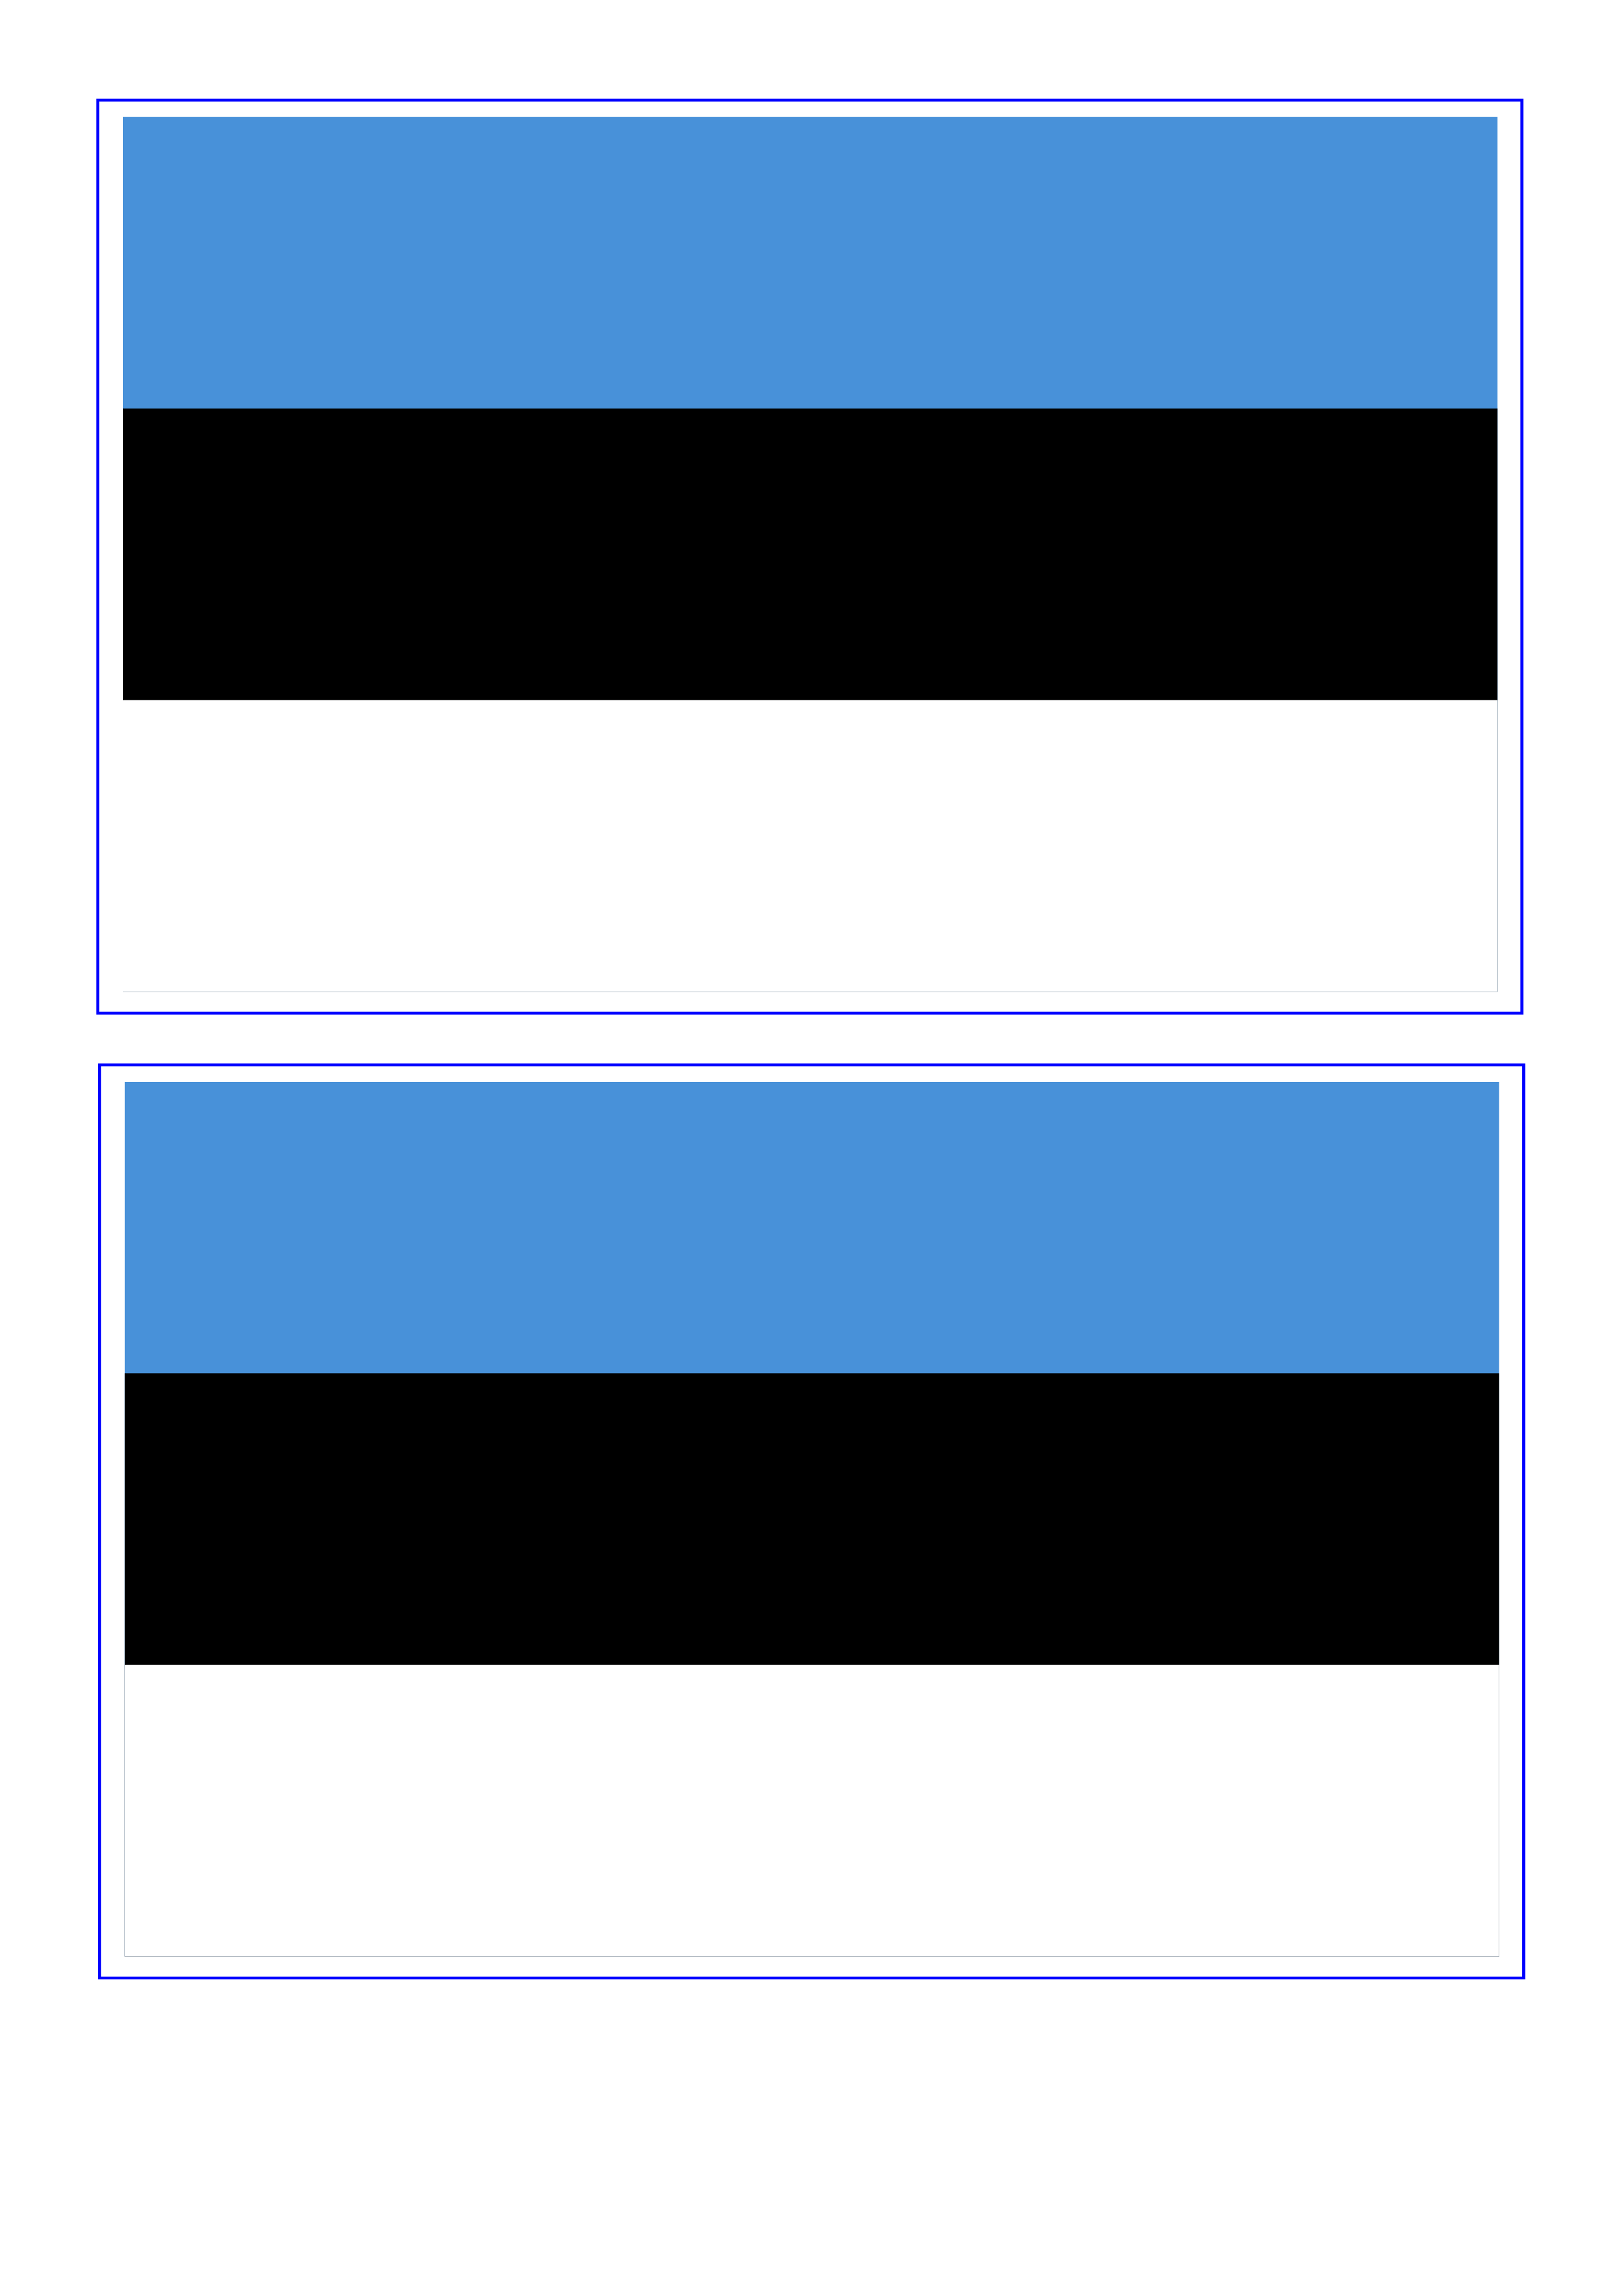 Estonia Flag main image